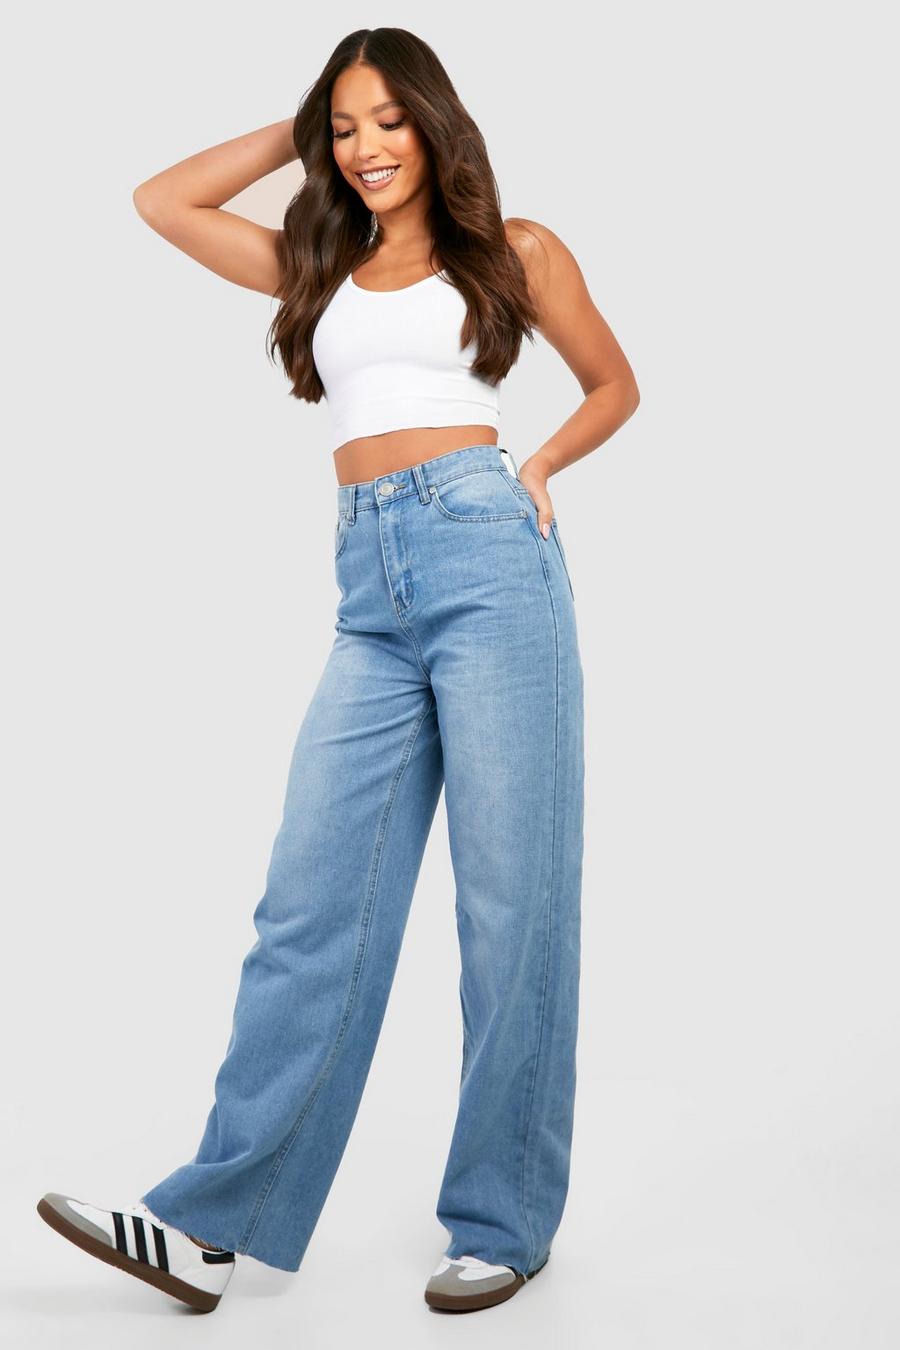 https://media.boohoo.com/i/boohoo/gzz38371_mid%20wash_xl/female-mid%20wash-tall-high-waisted-basic-wide-leg-jeans/?w=900&qlt=default&fmt.jp2.qlt=70&fmt=auto&sm=fit